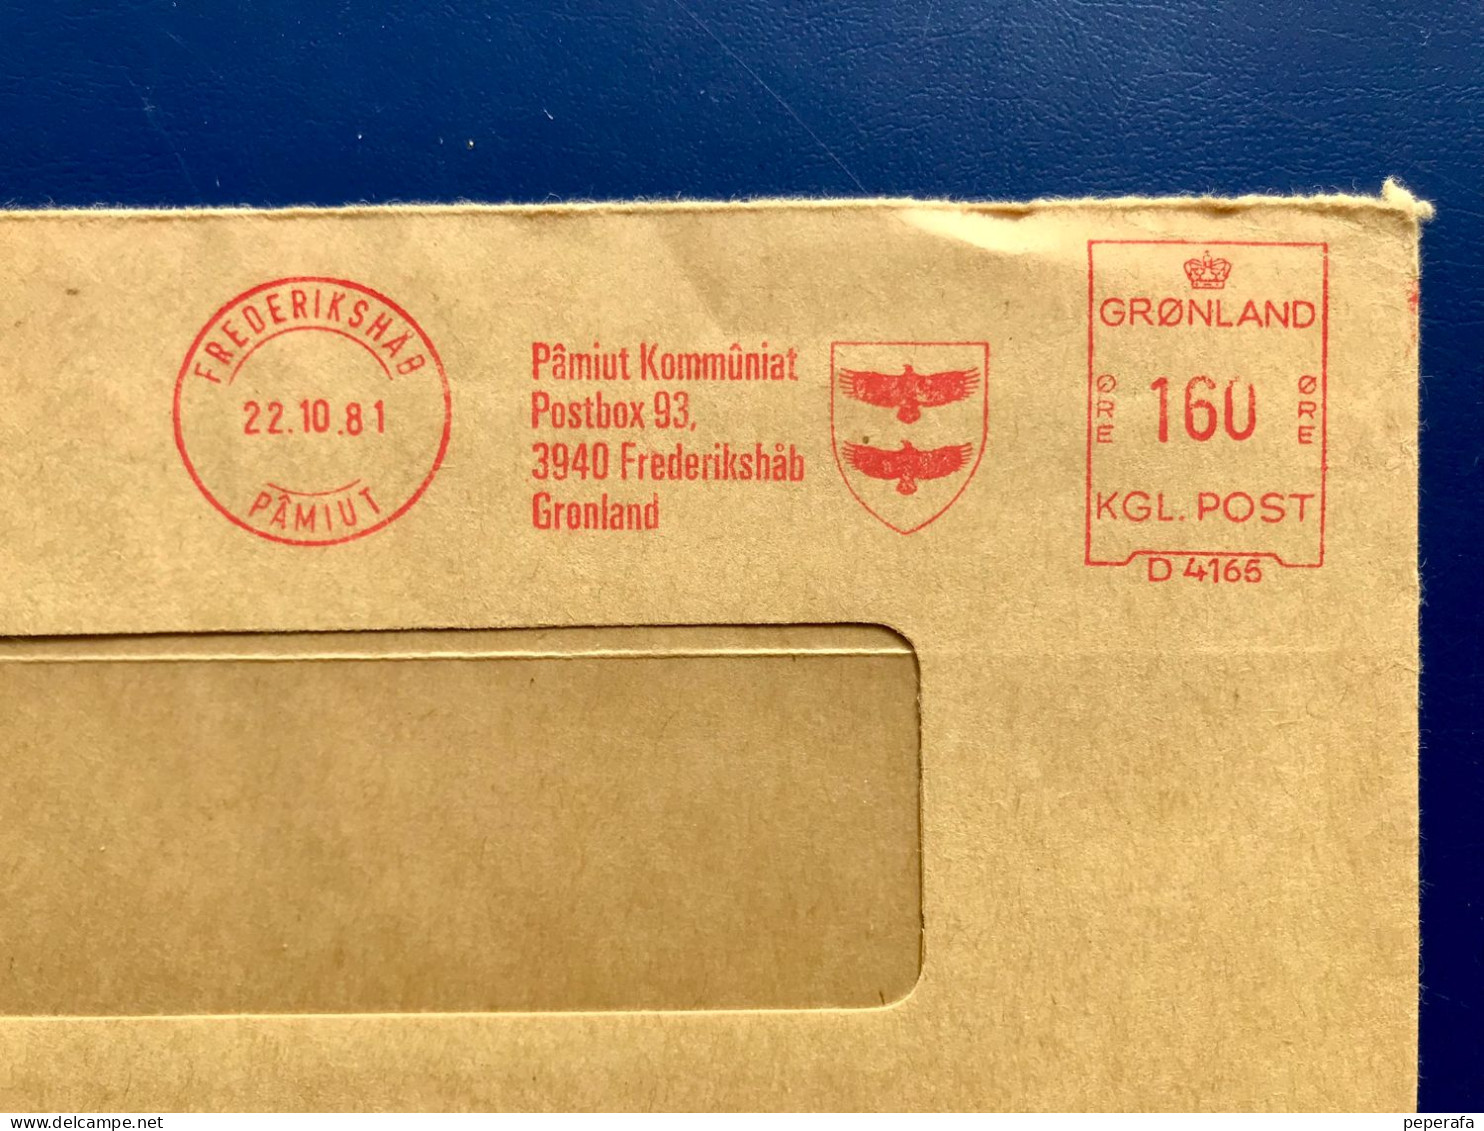 Denmark, Greenland GRØNLAND, 2 COVER POSTAGE METER, FRANQUEO MECÁNICO (FRANCOFILIA 1) - Postmarks